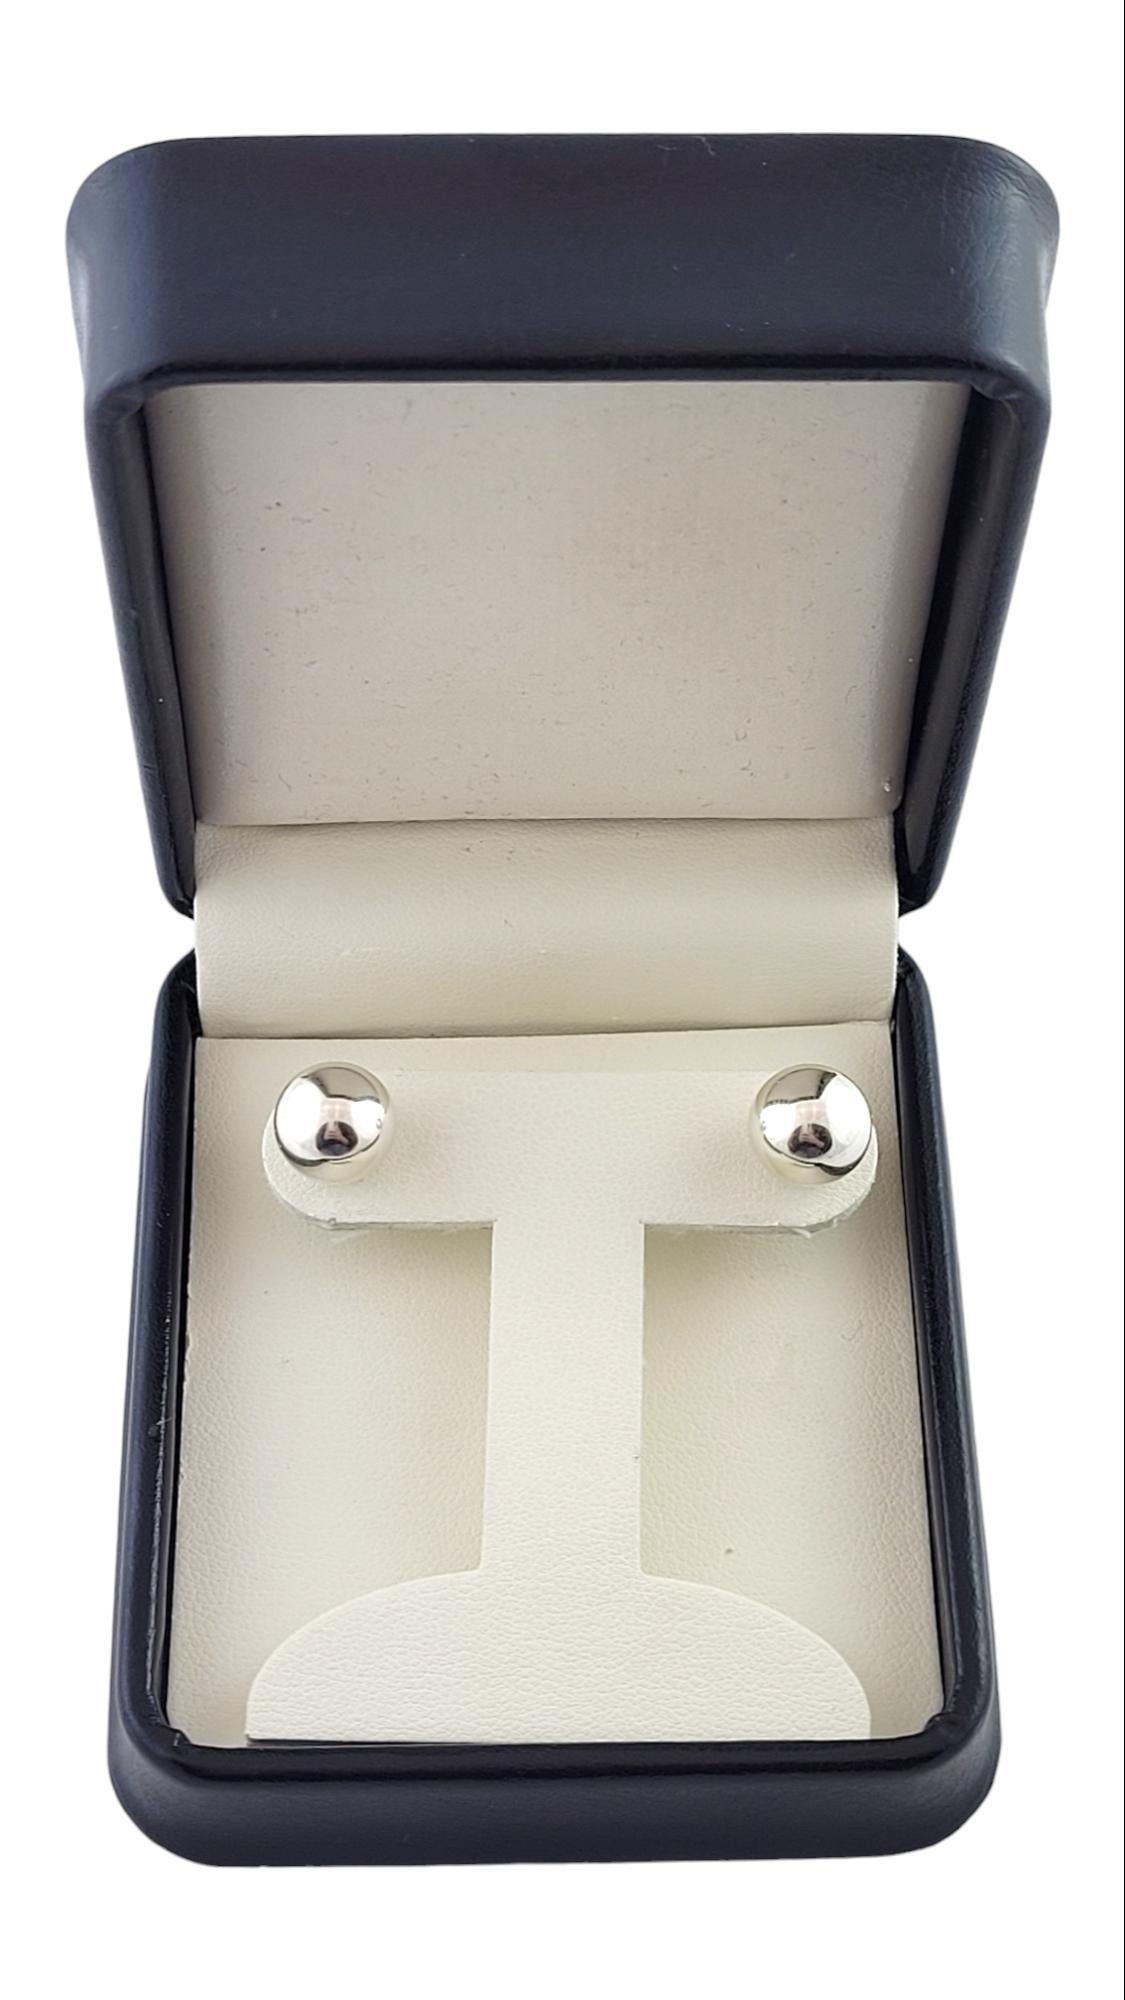 Tiffany & Co. Sterling Silver Ball Stud Earrings w/ Tiffany Box #15823 2